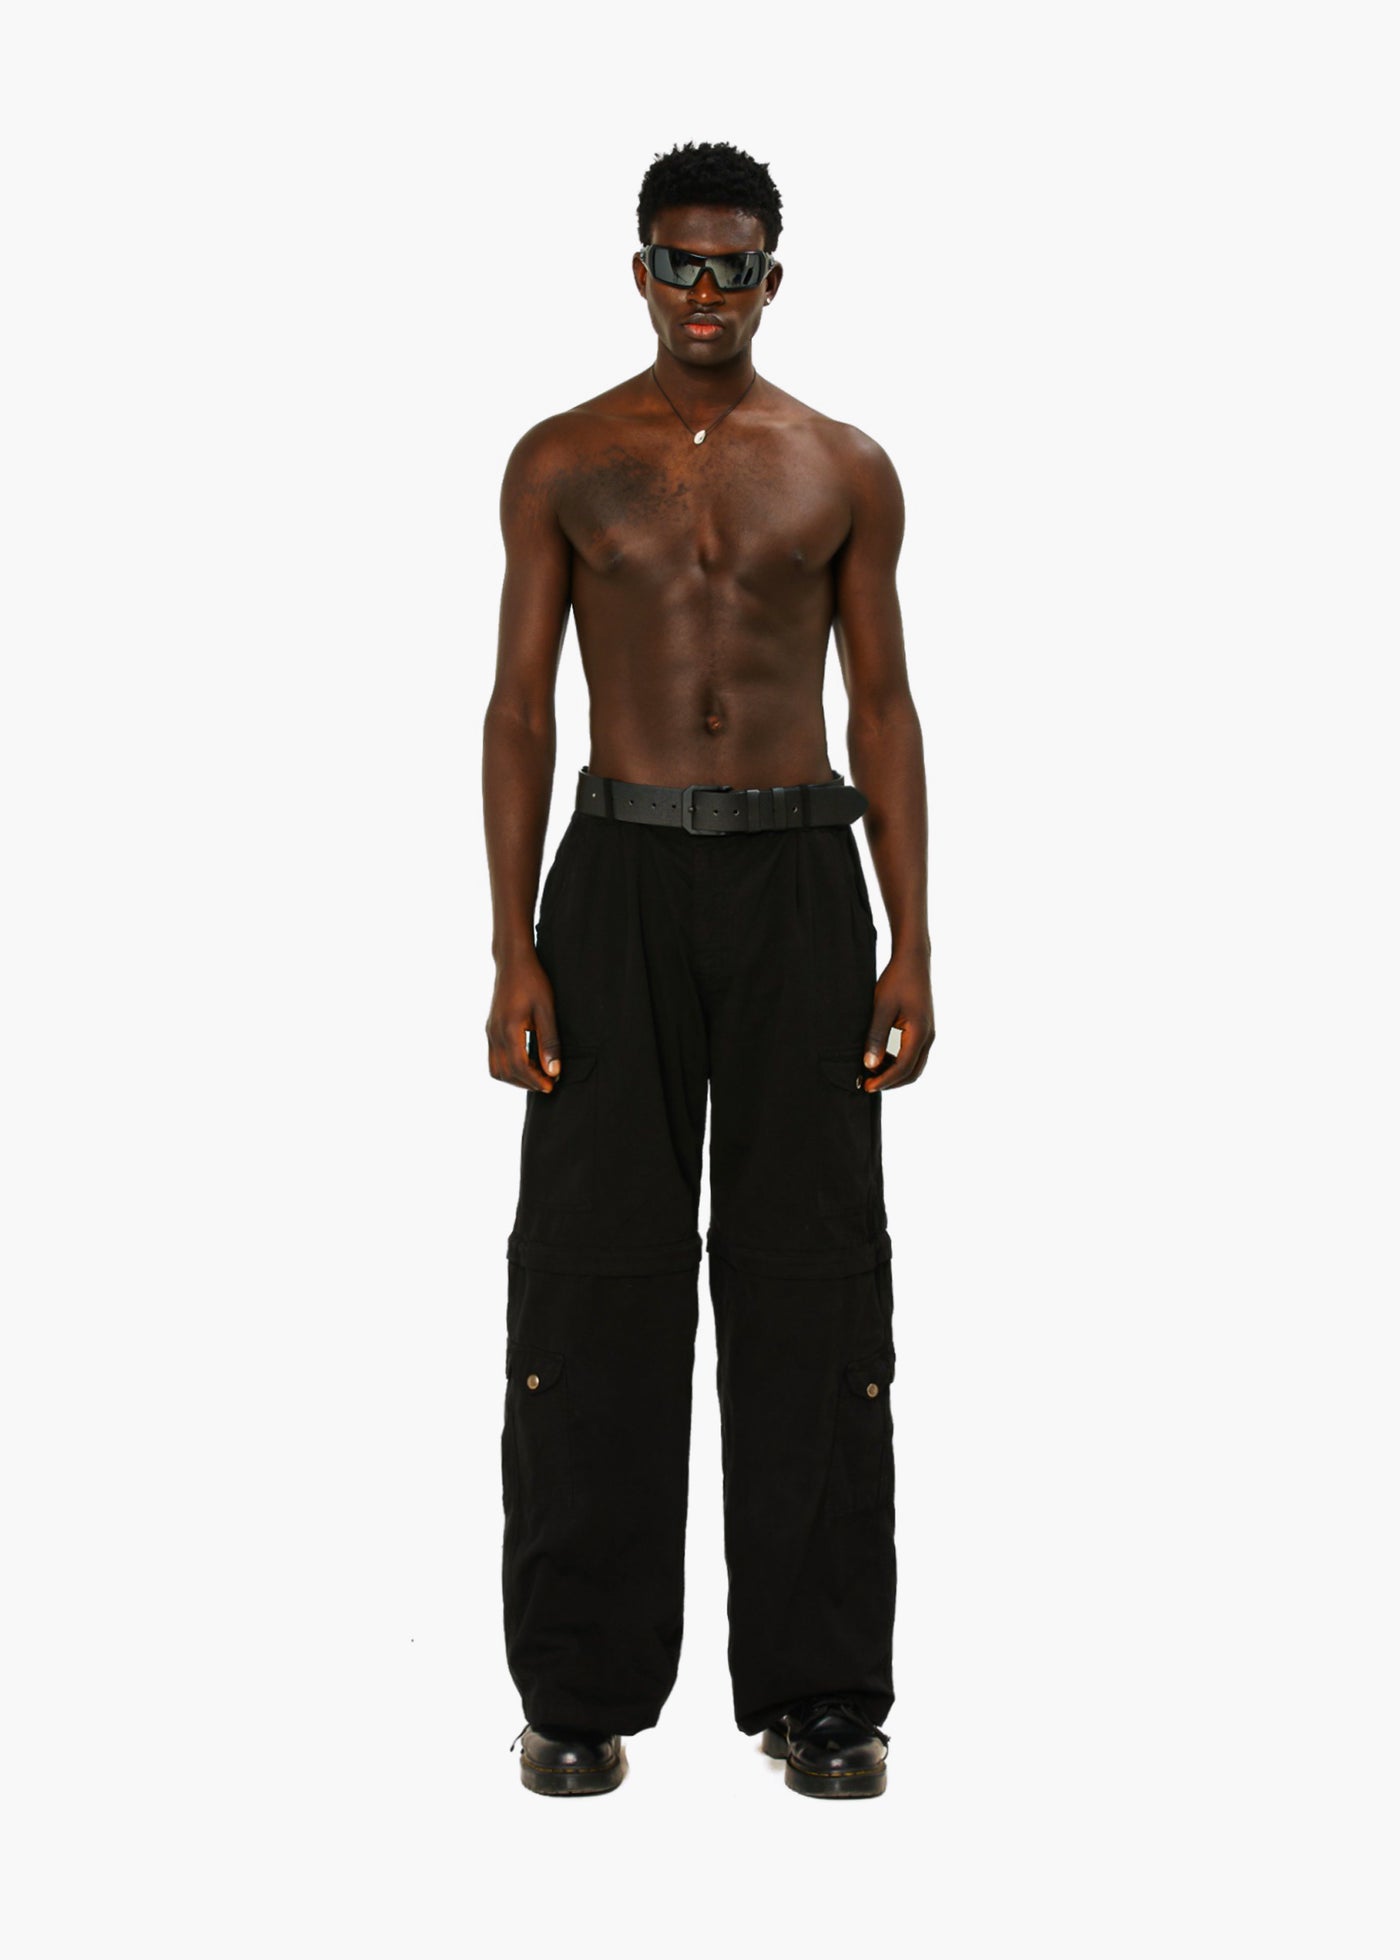 Black cargo pants/shorts